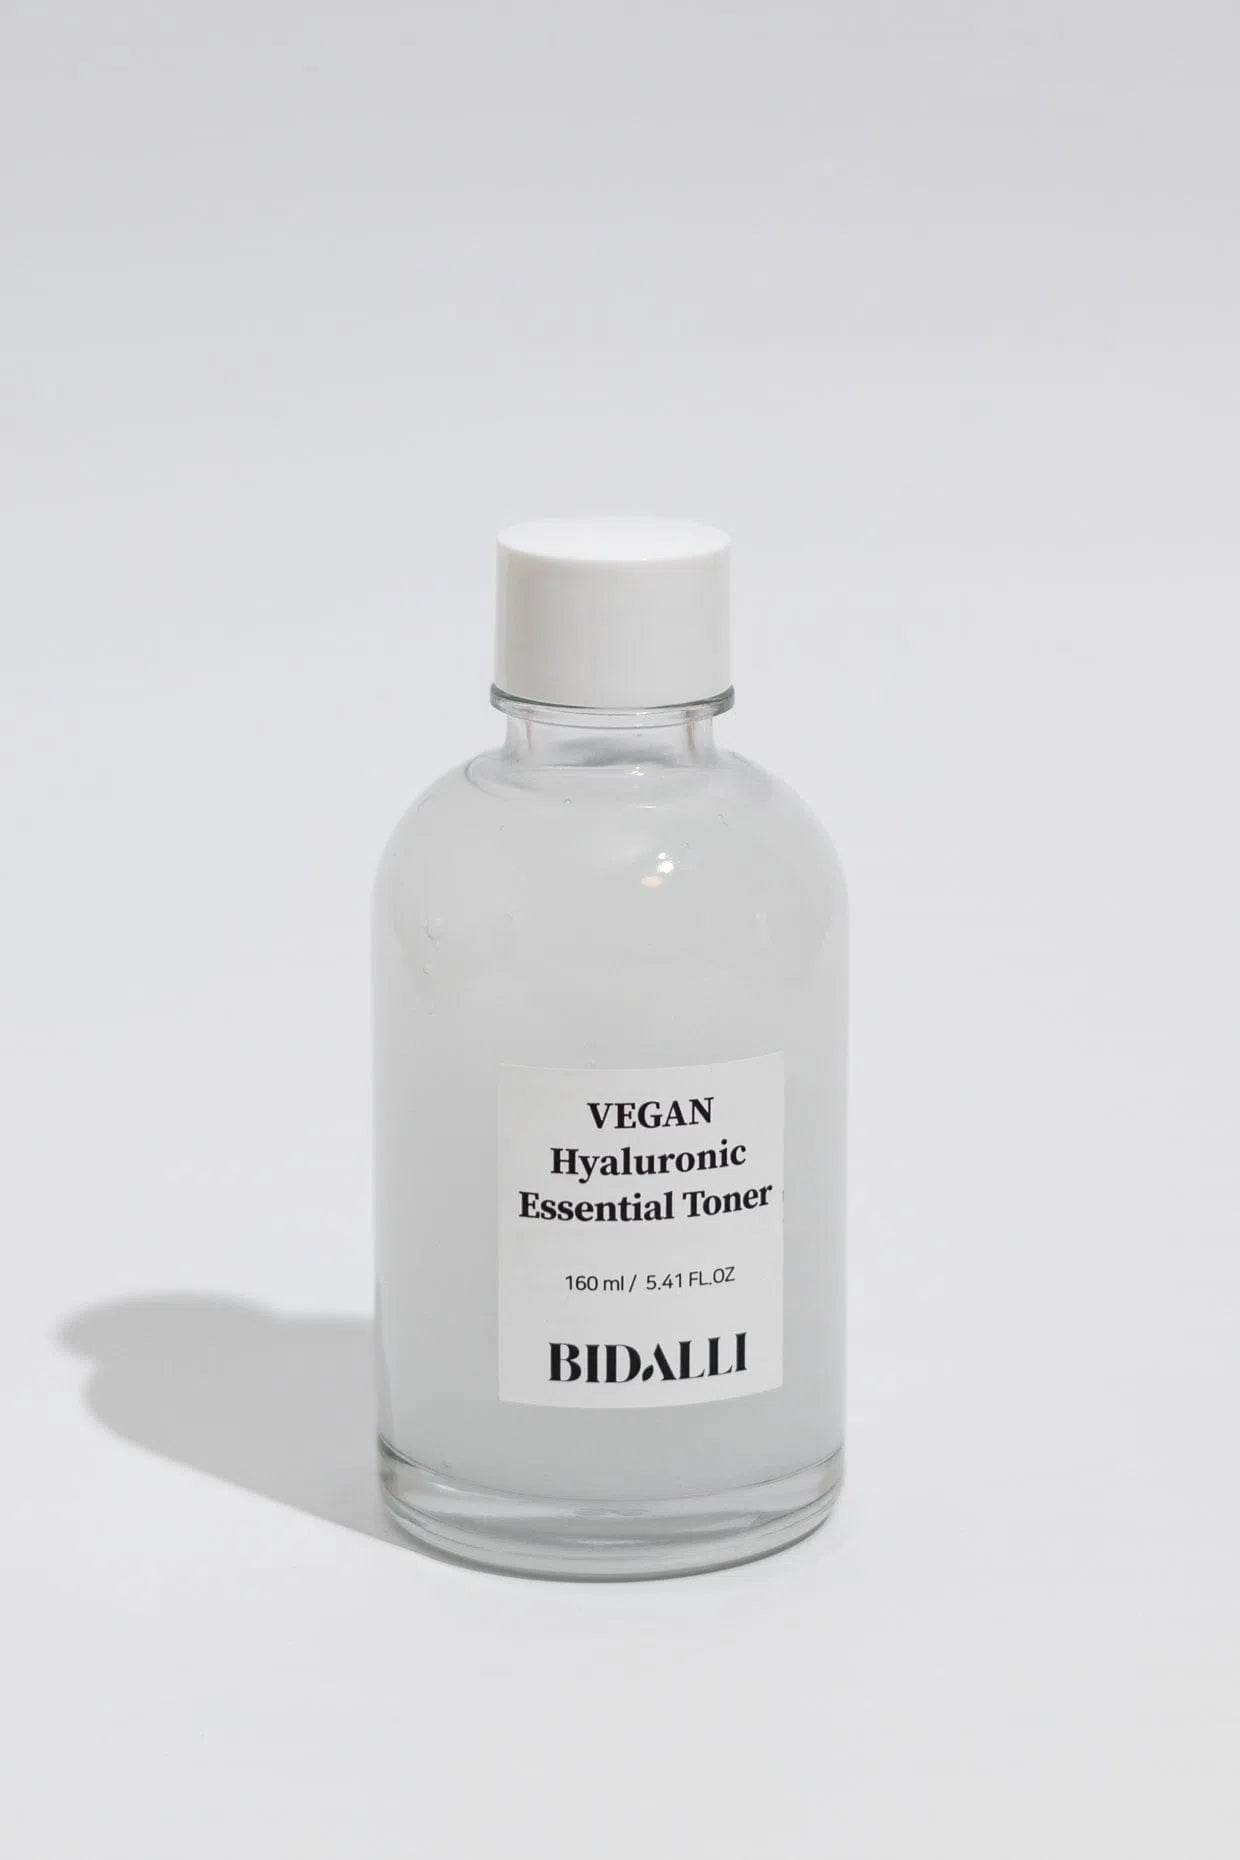 Bidalli Vegan Hyaluronic Essential Toner